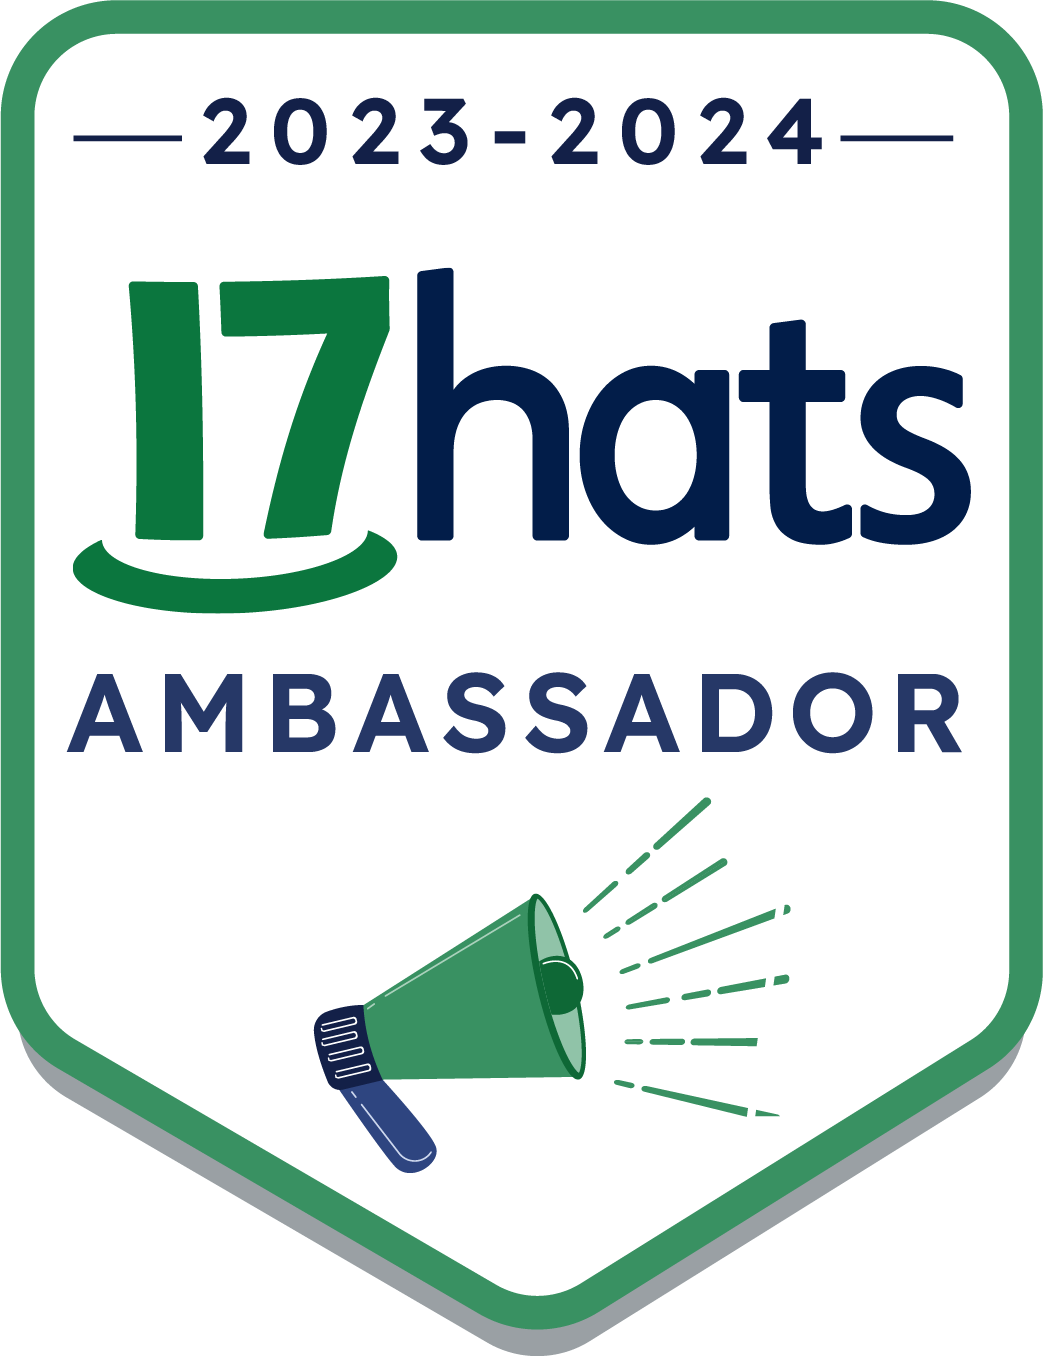 A logo for a 17hats ambassador with a green megaphone.